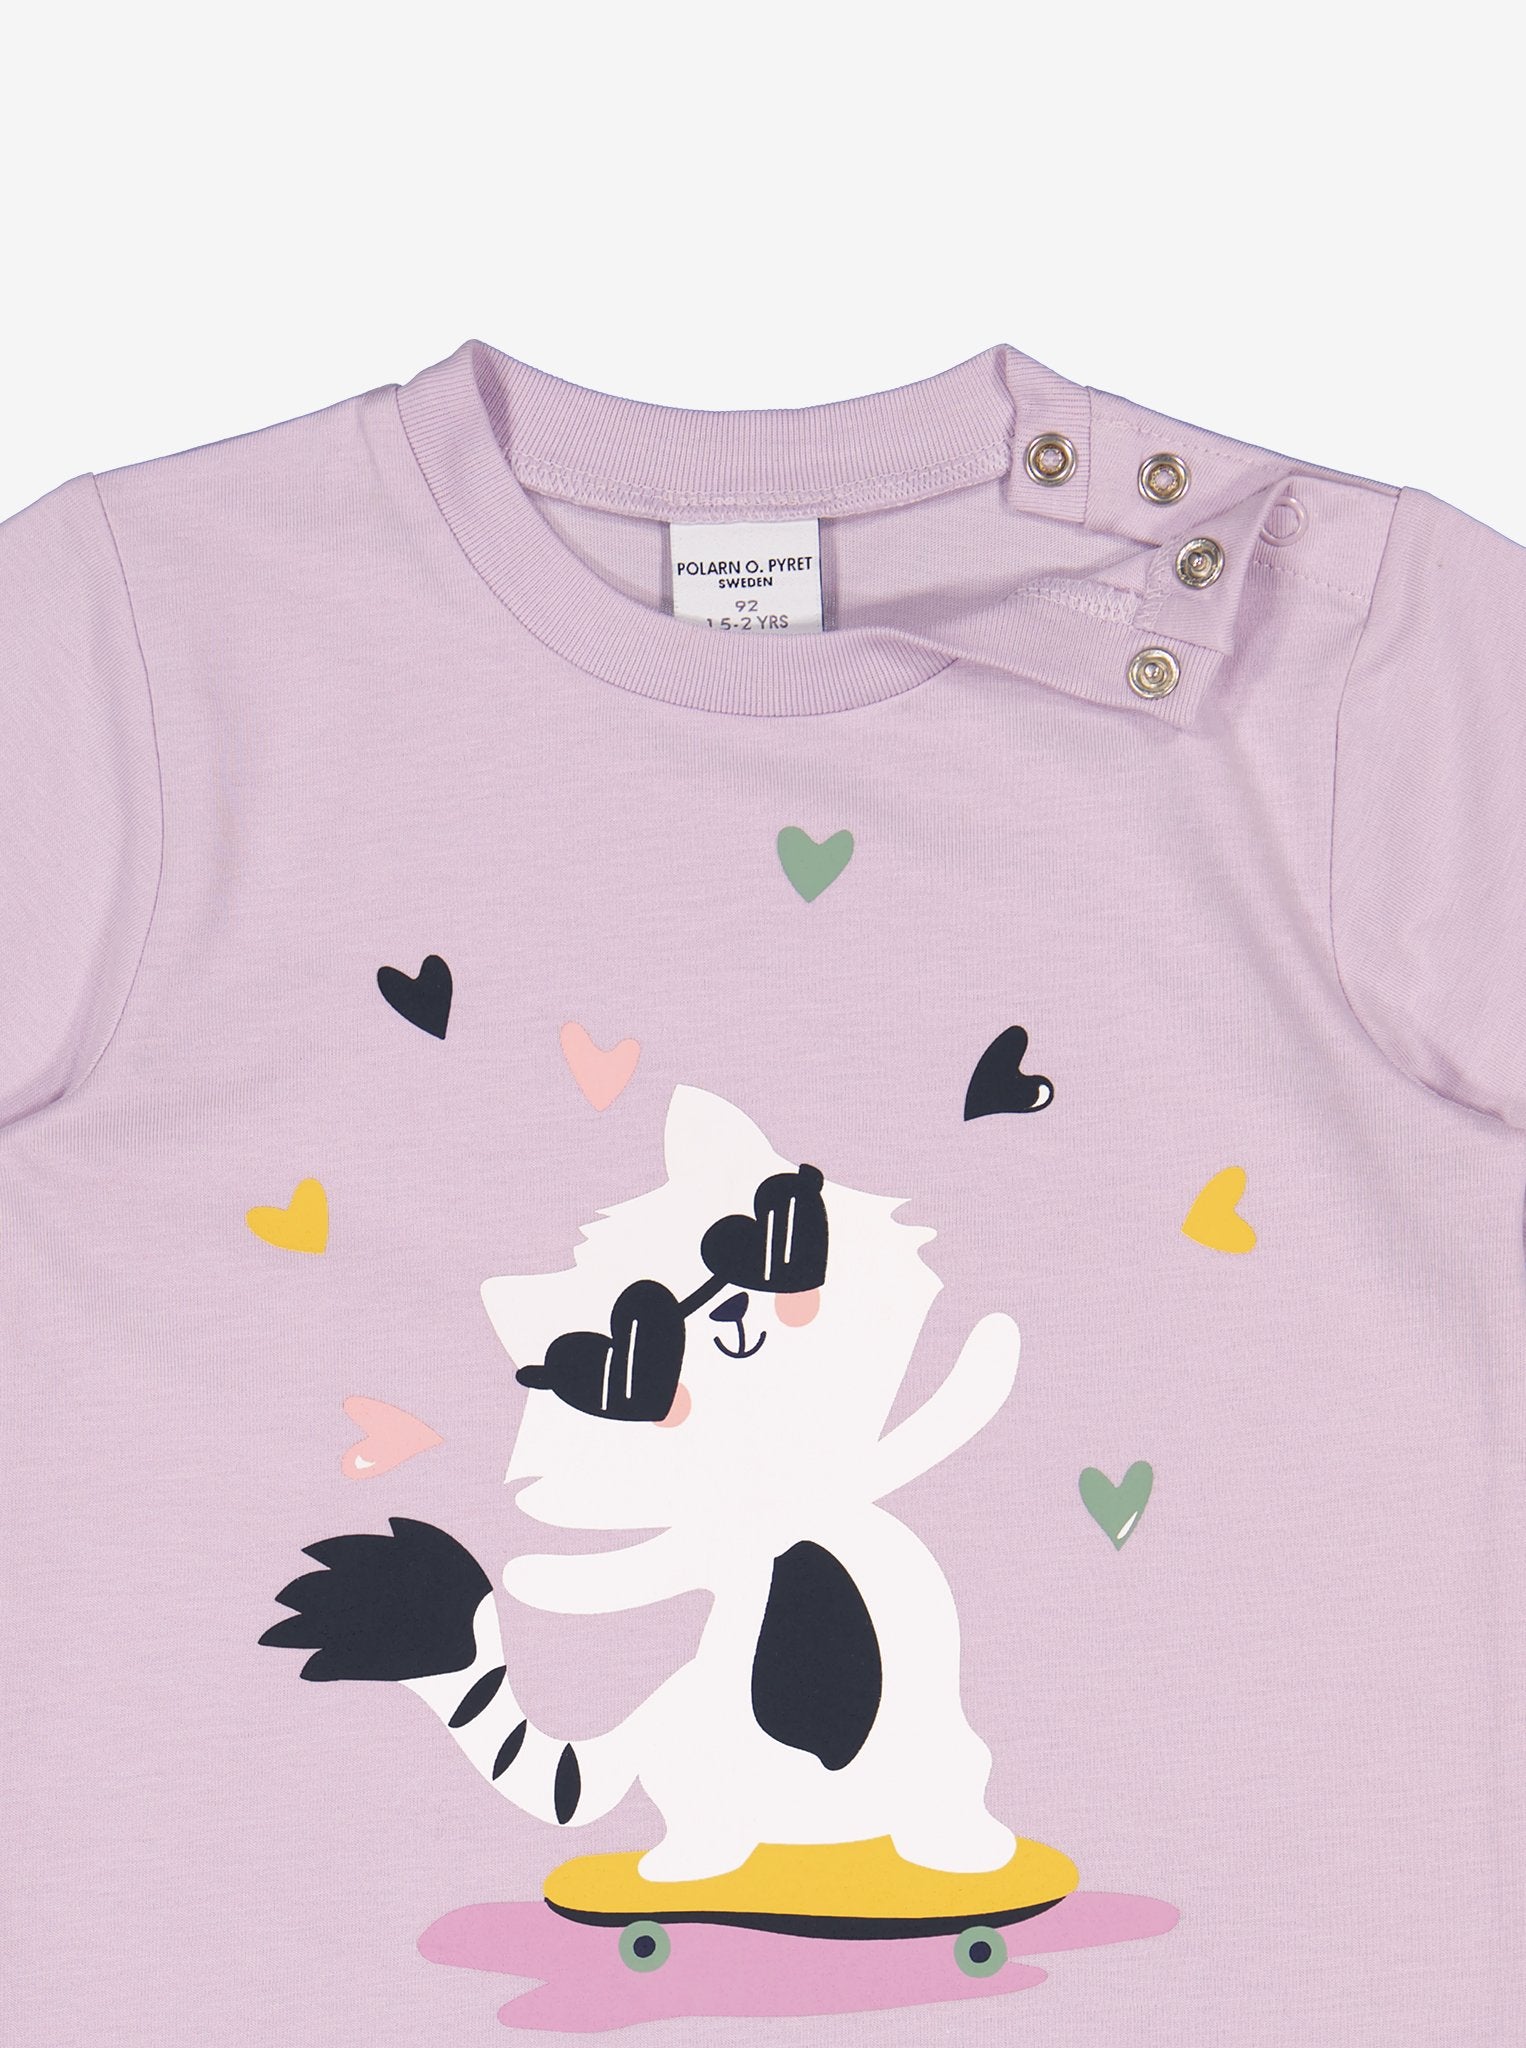  Organic Purple Cat Print Kids T-Shirt from Polarn O. Pyret Kidswear. Made with 100% organic cotton.